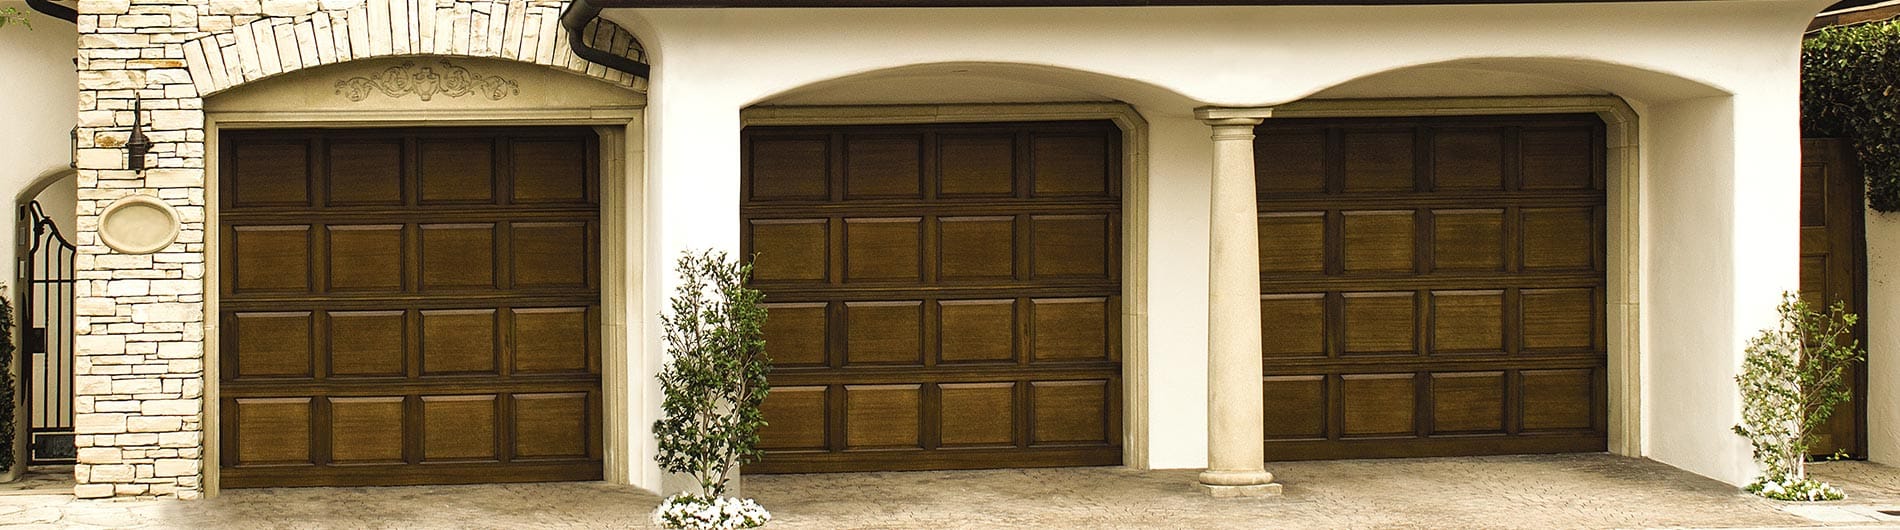 Raised wood panel garage doors by Wayne Dalton